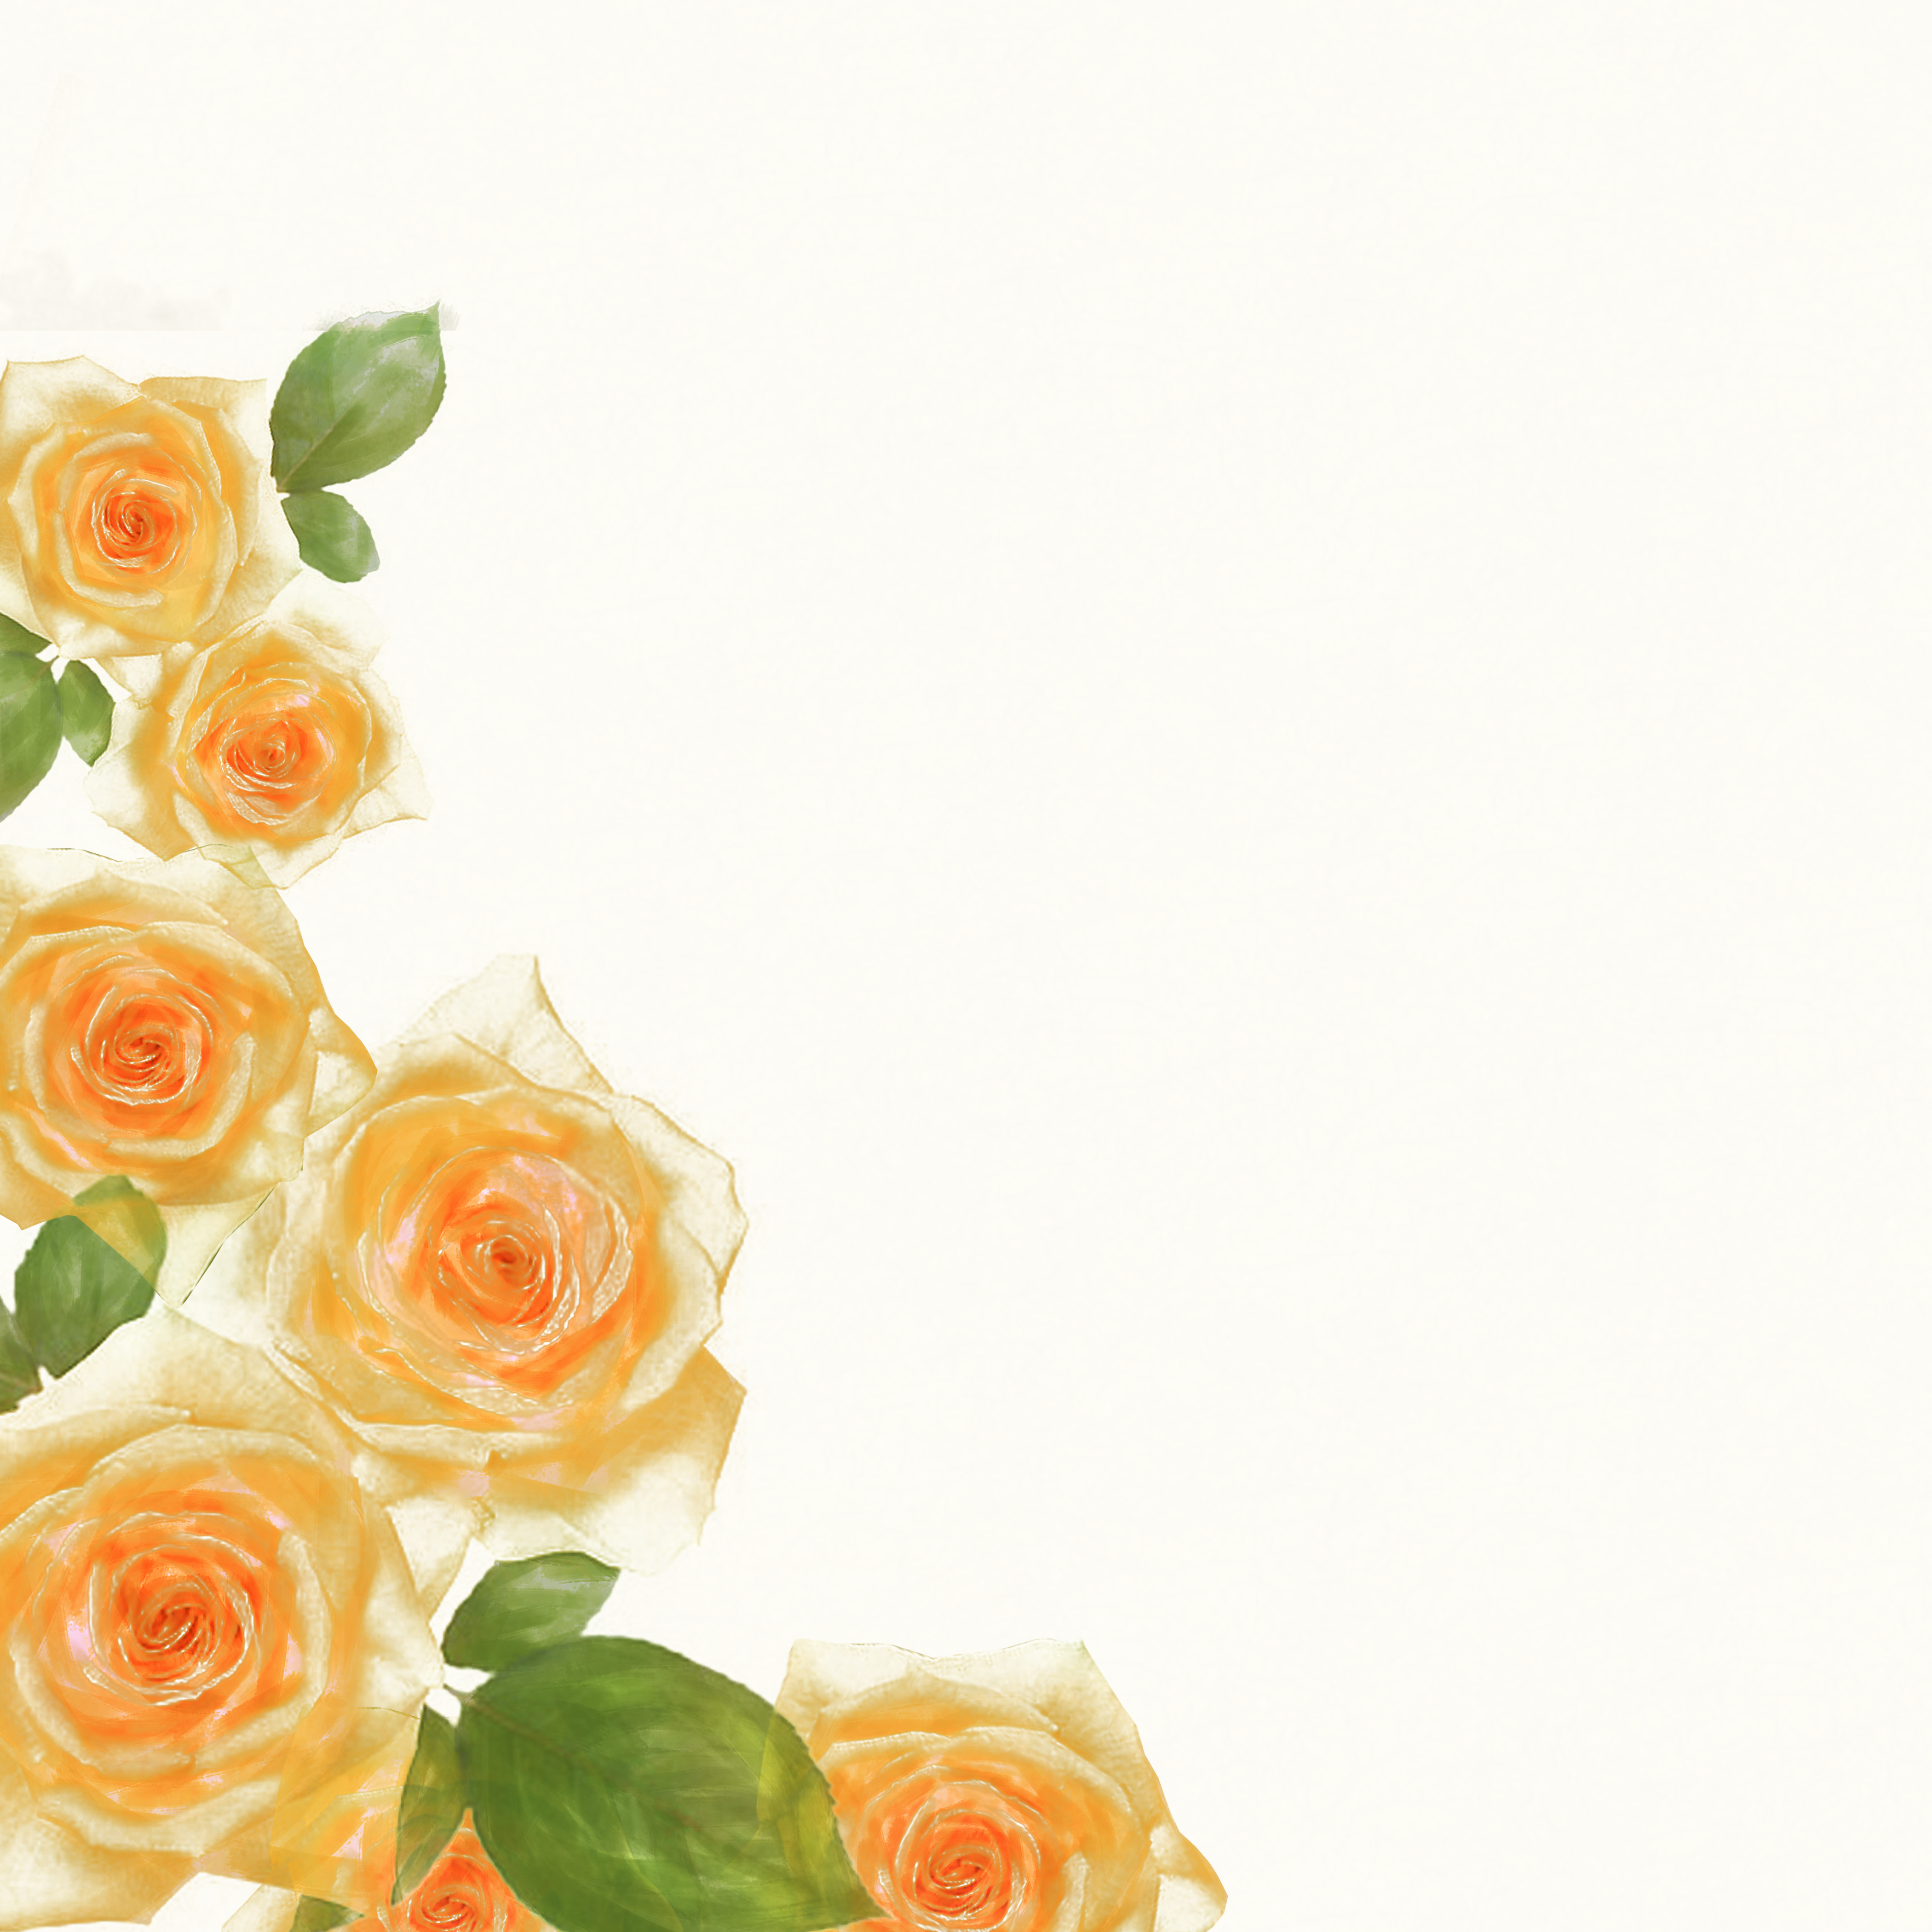 Watercolor Rose Border Floral Albums Download Free Image PNG Image